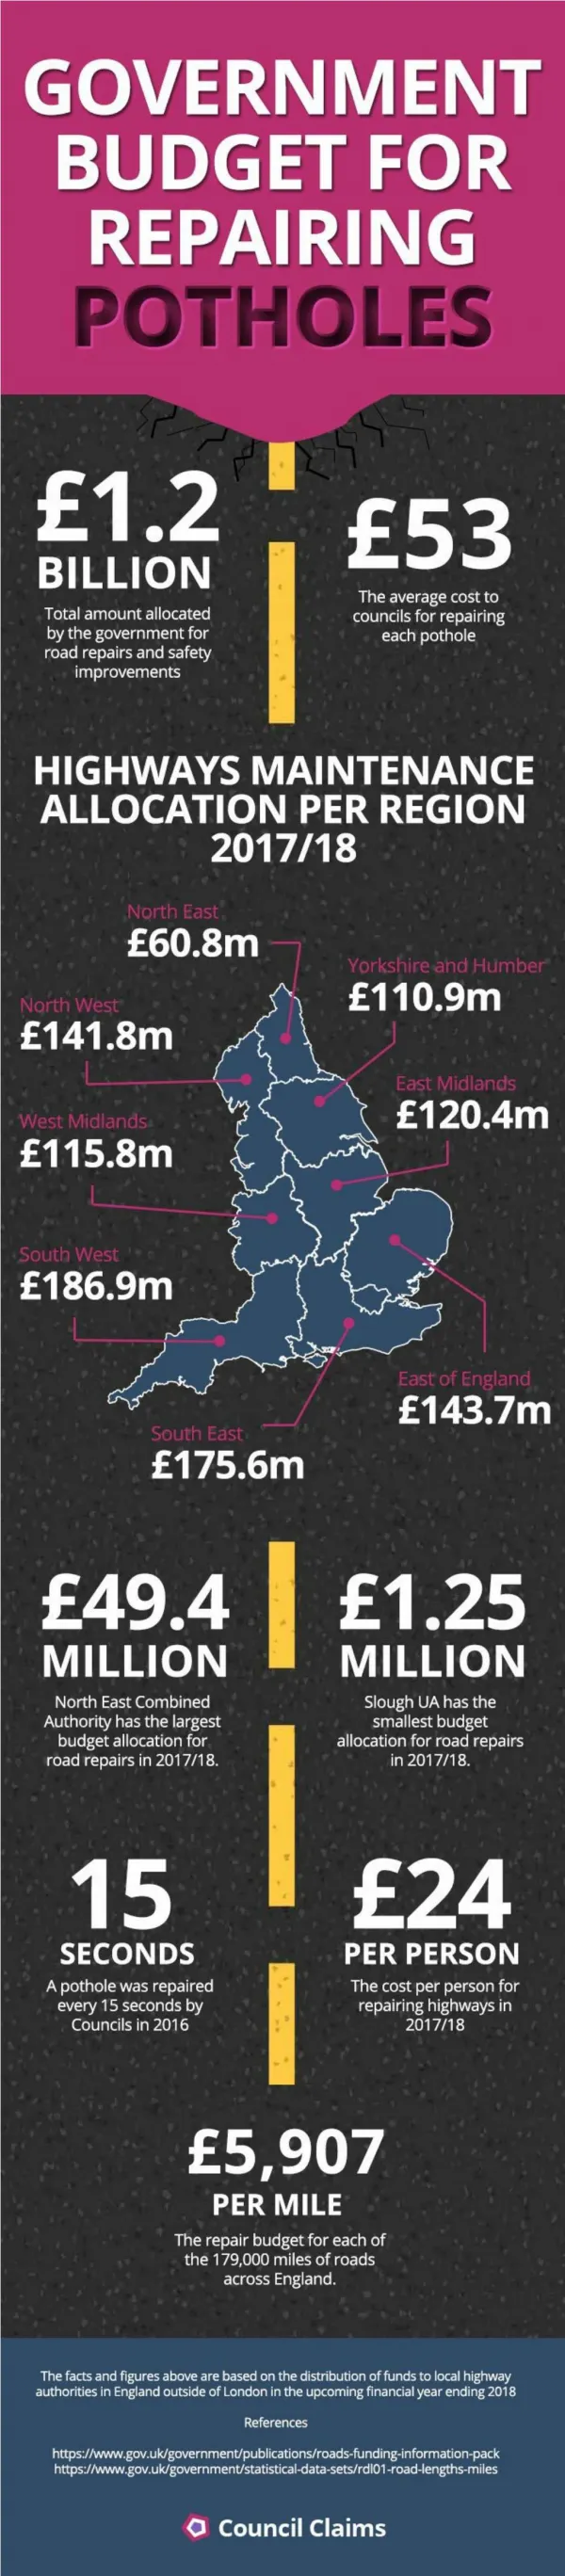 Cost of Repairing Potholes in the UK